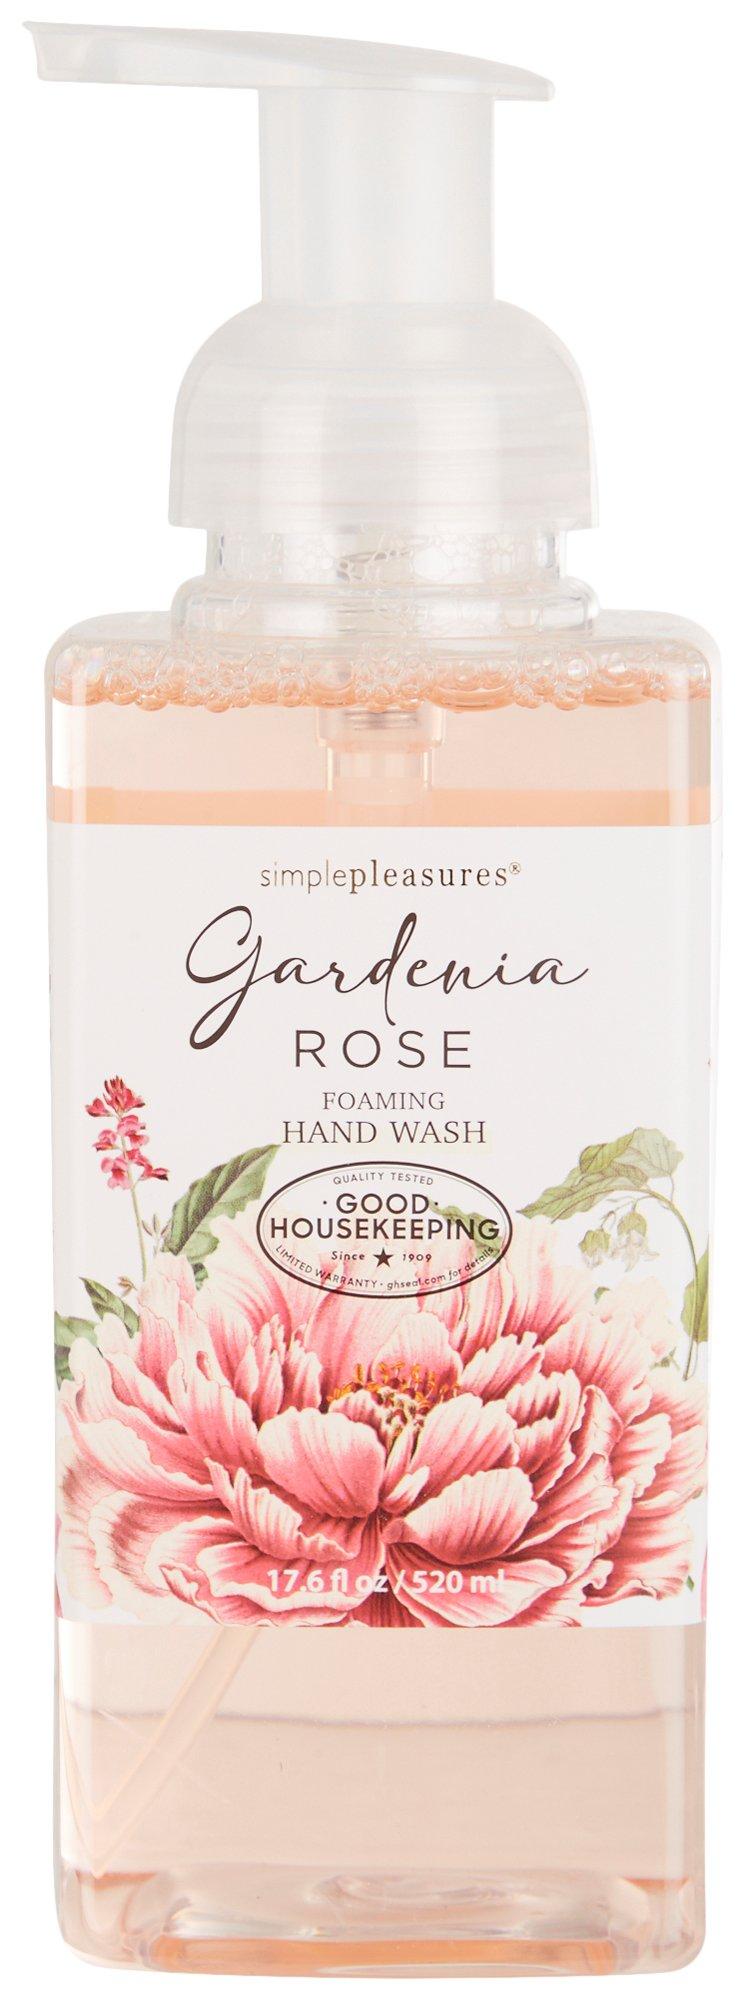 Gardenia Rose Foaming Liquid Hand Soap